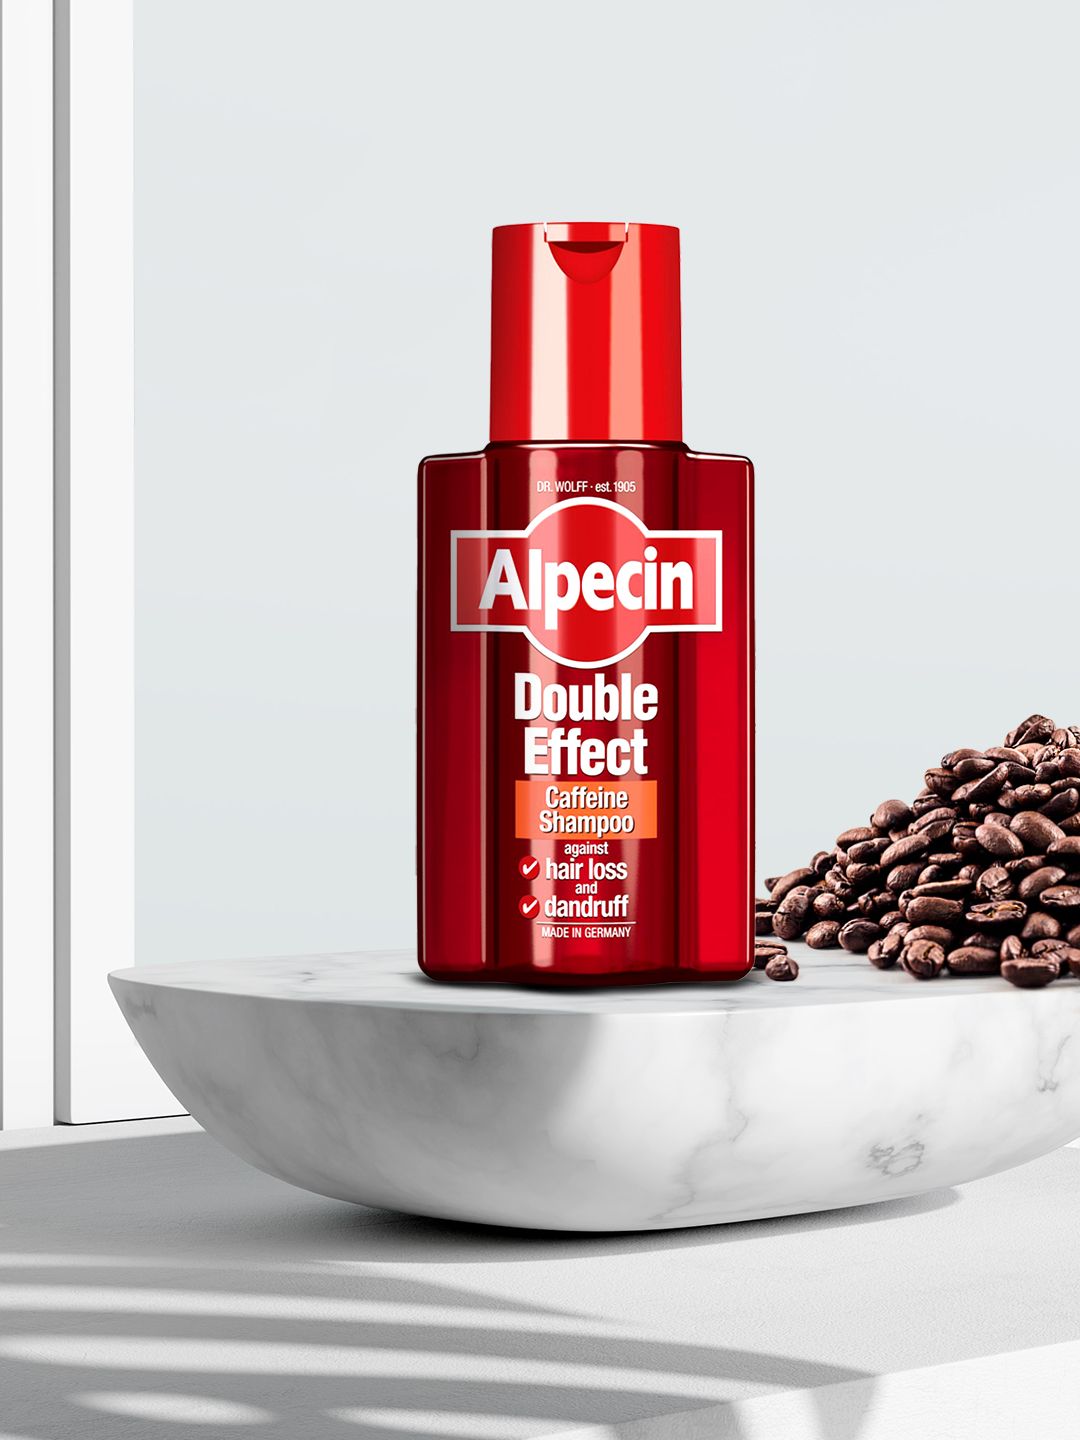 Alpecin Double Effect Caffeine Anti Dandruff Shampoo - 200 ml Price in India